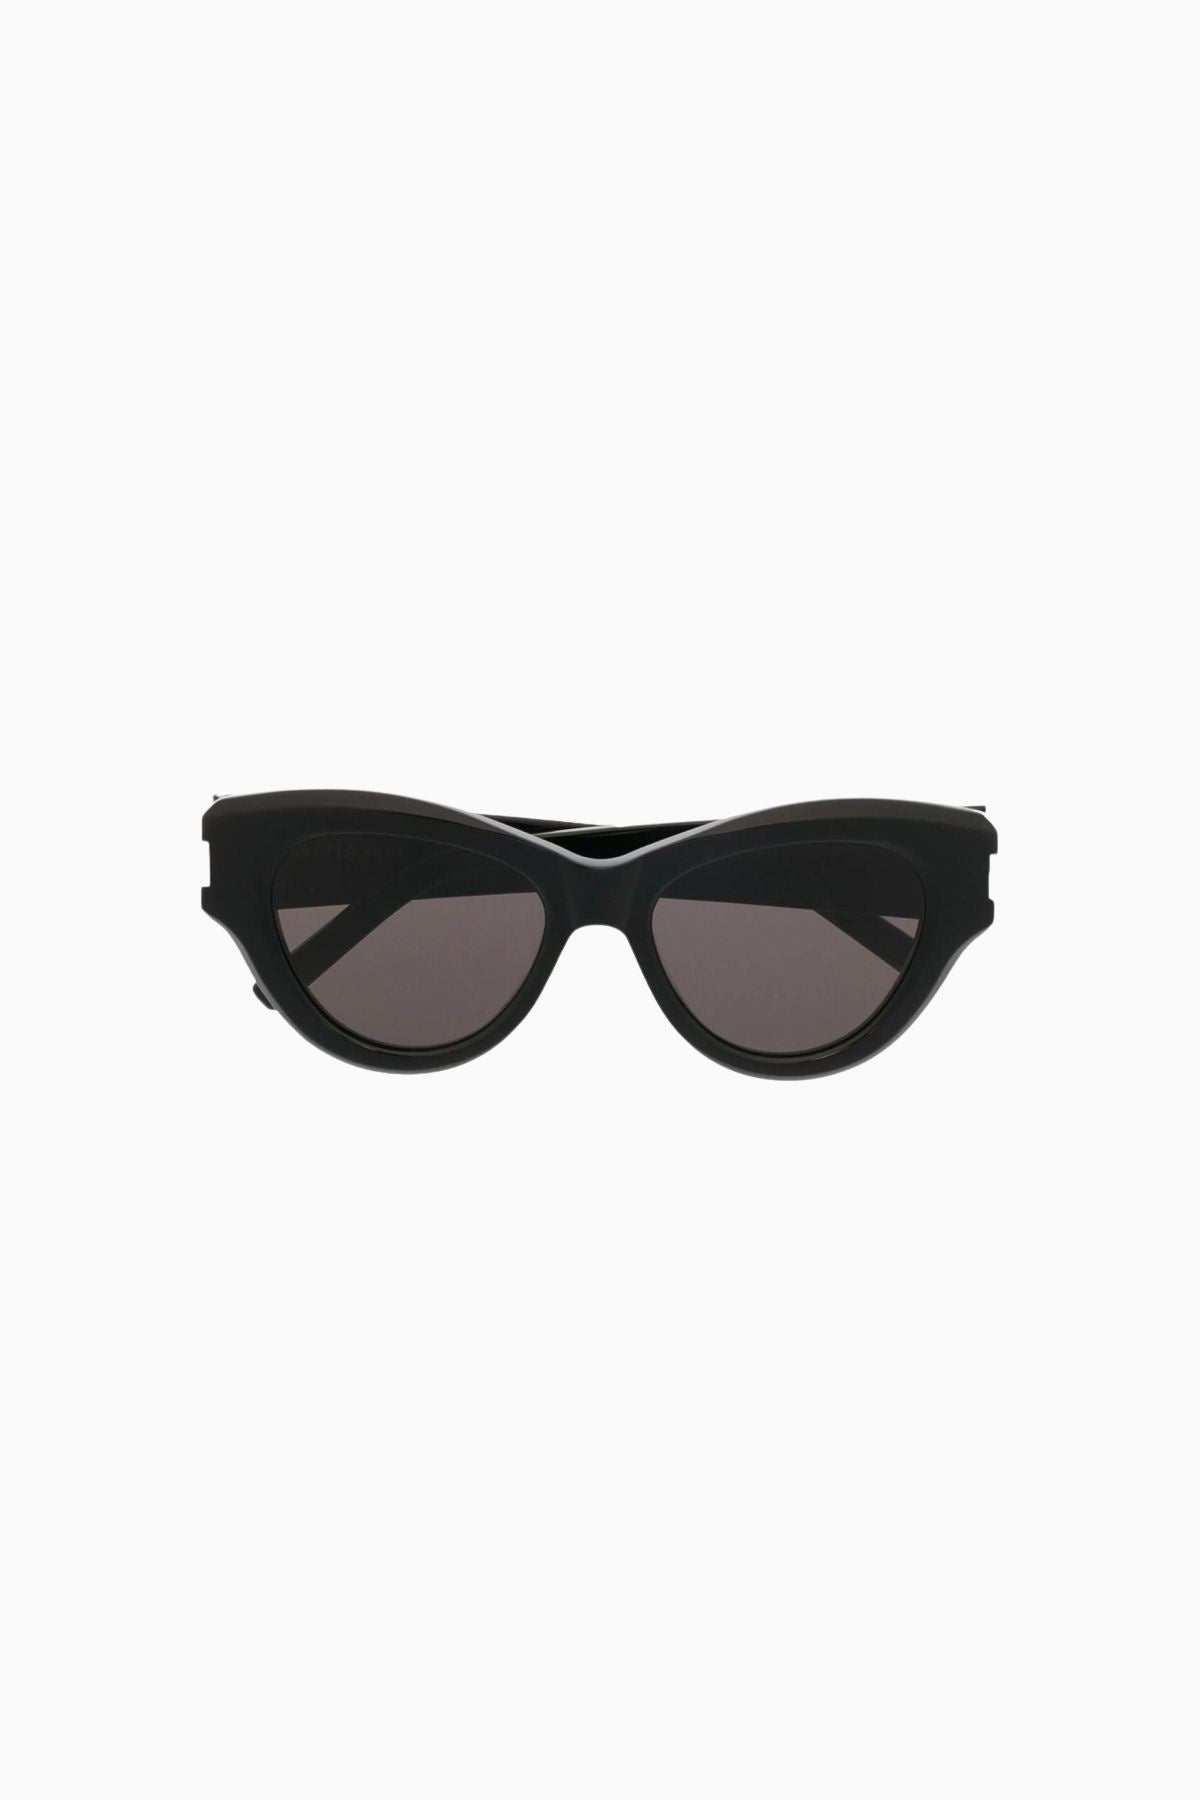 Saint Laurent Thick Cat Eye Sunglasses - Black